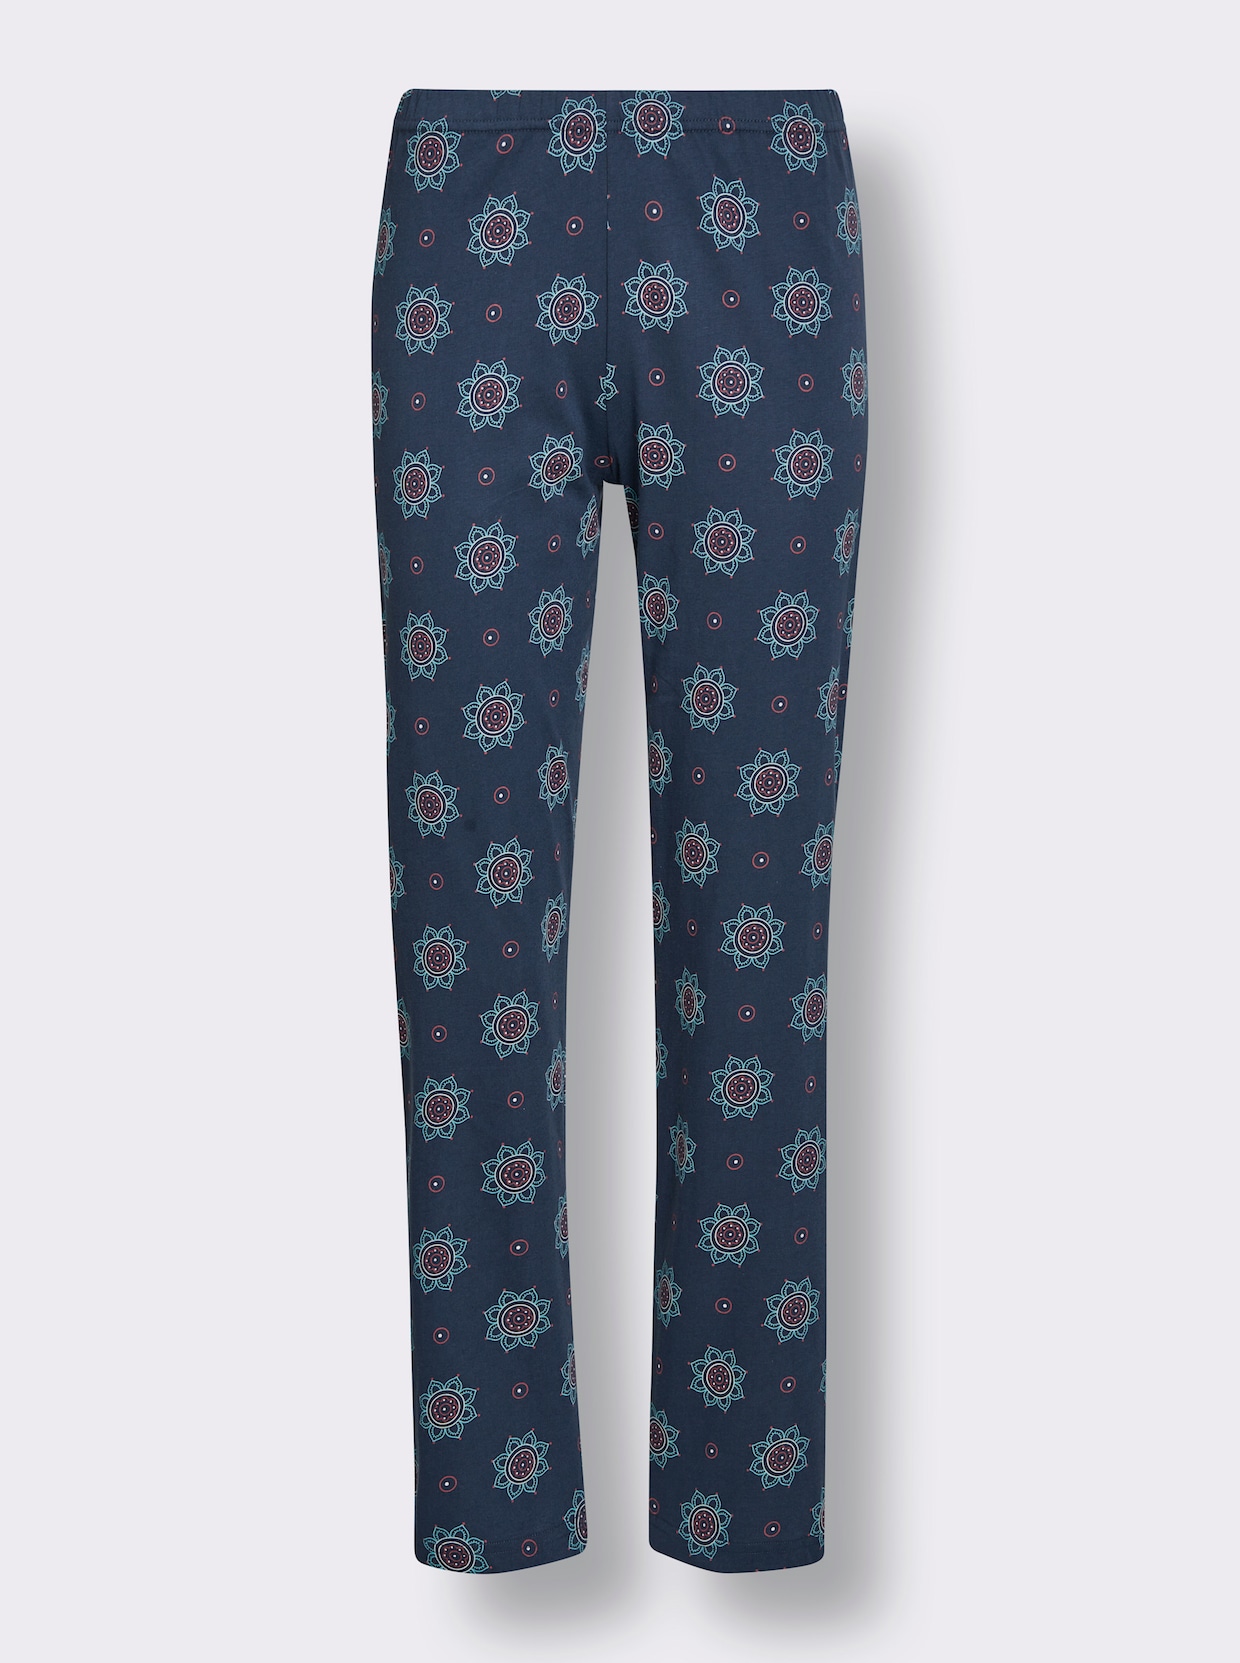 Comtessa Pyjama - turquoise/marine bedrukt